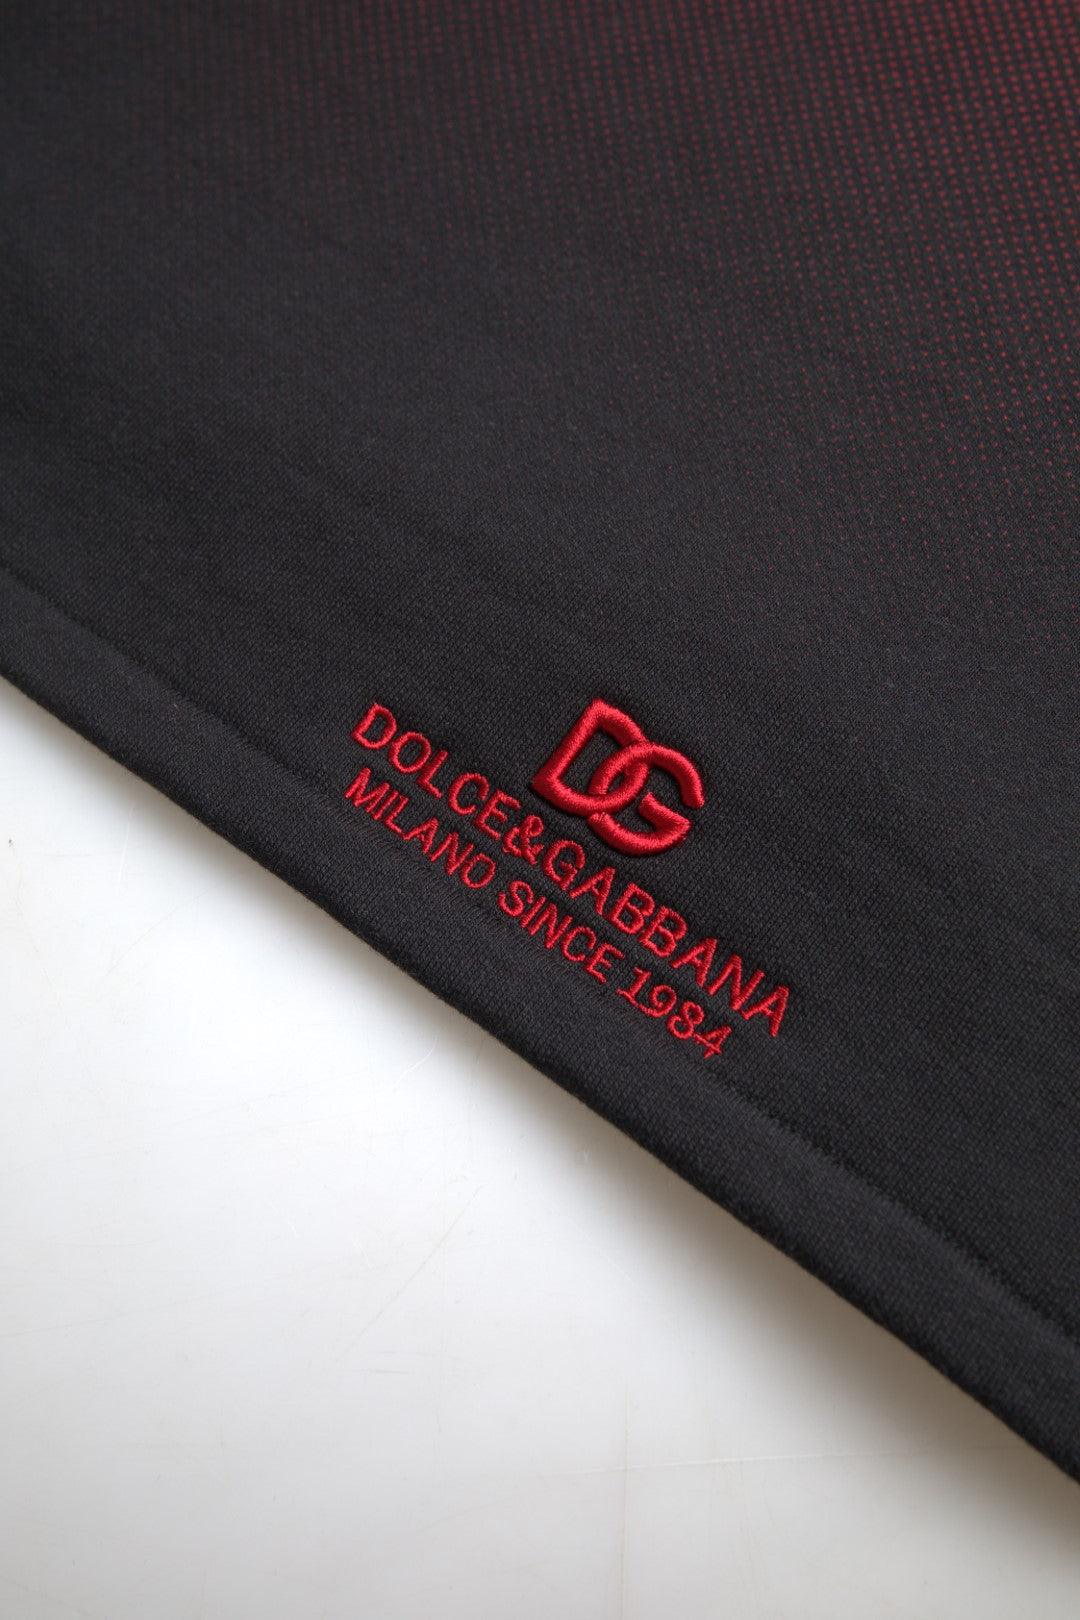 Dolce & Gabbana Red Leopard Print Cotton Tank Top - PER.FASHION